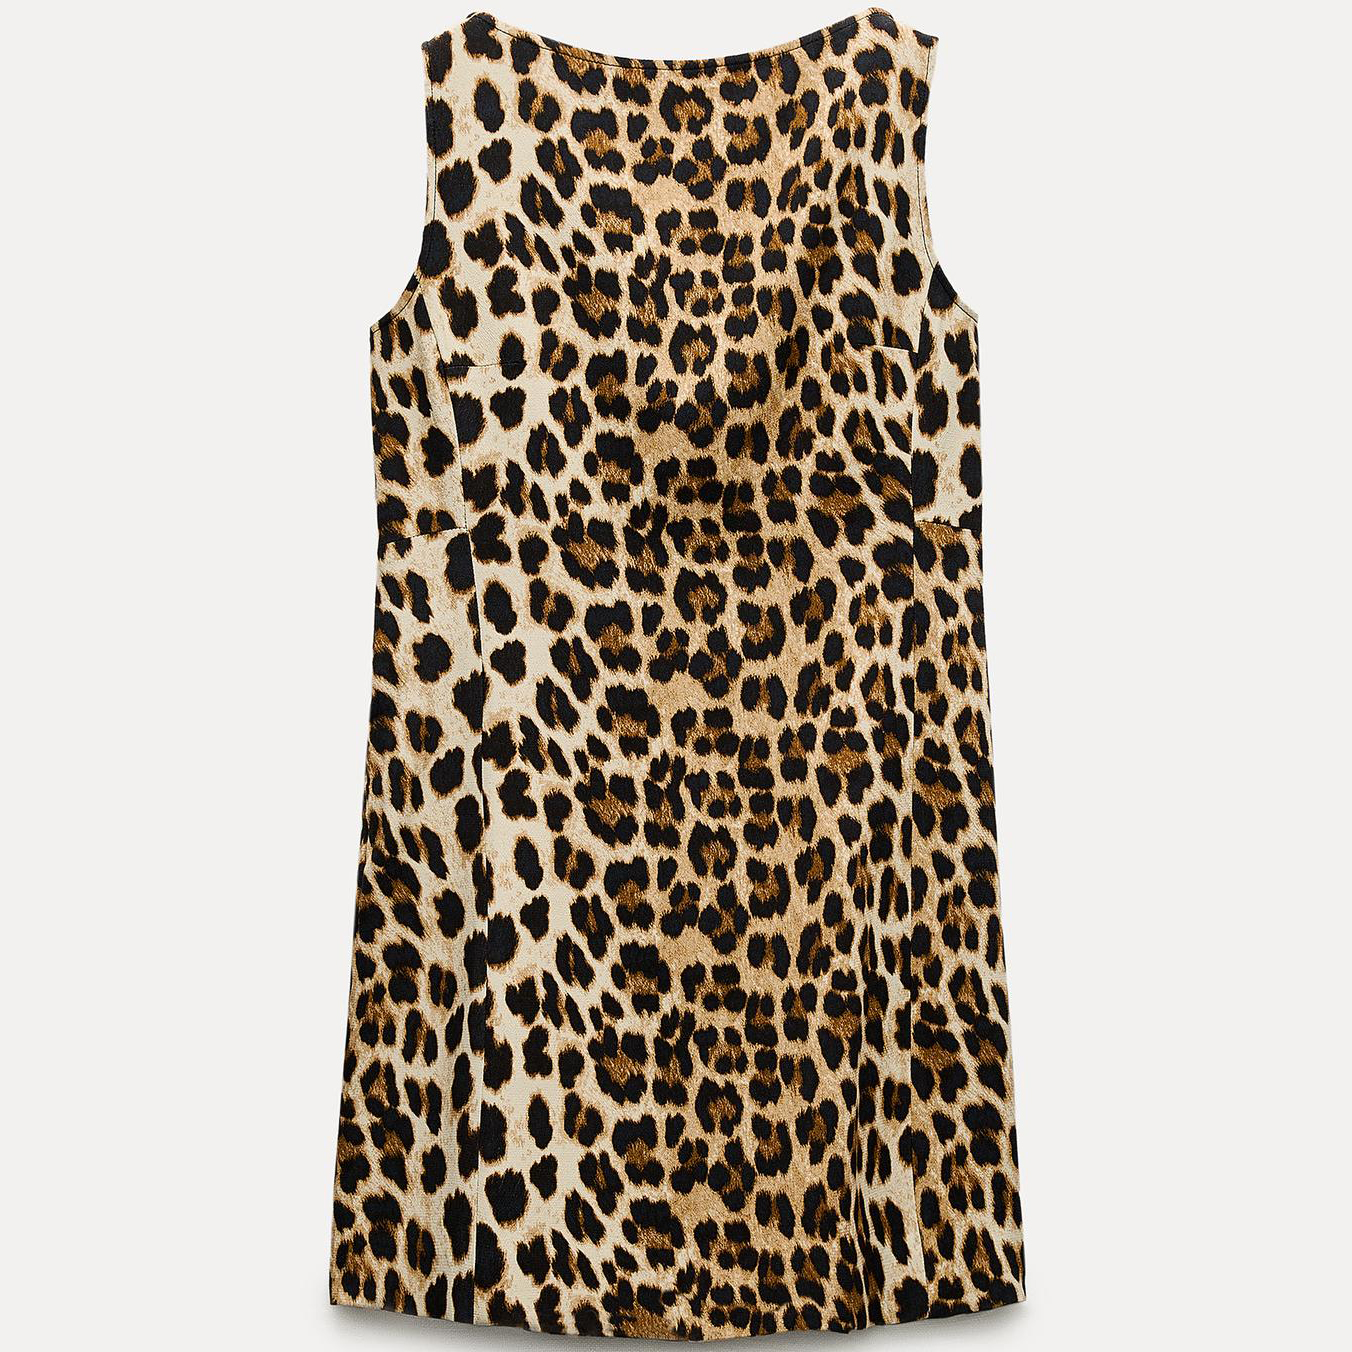 Платье Zara ZW Collection Leopard Animal Print, коричневый/мультиколор блуза zara zw collection animal print коричневый